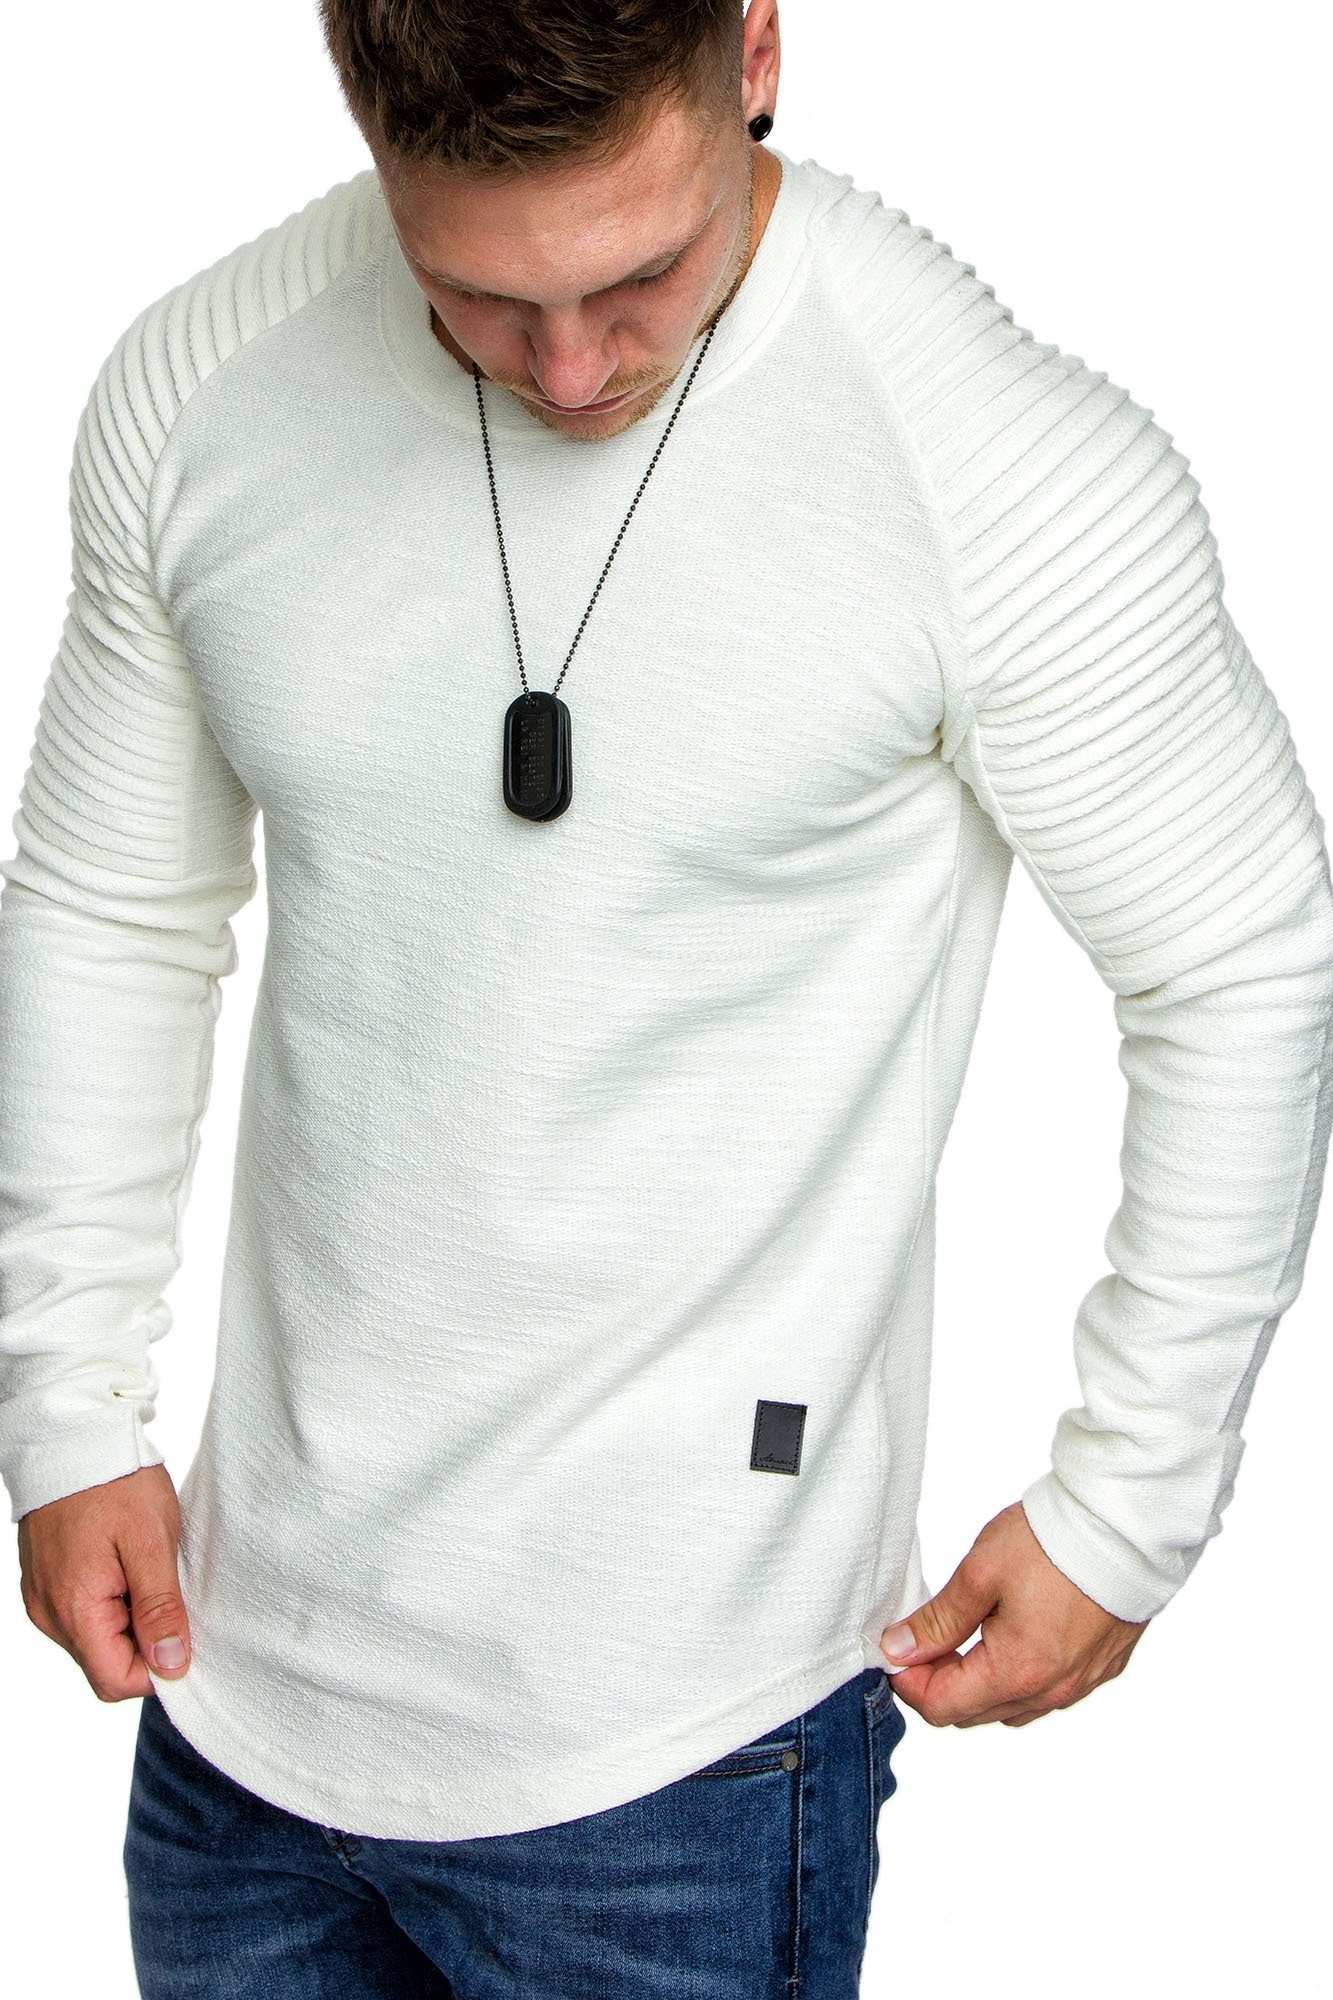 Amaci&Sons Sweatshirt Gresham Sweatshirt Herren Basic Kontrast Sweatjacke Pullover Hoodie Kapuzenpullover Weiß